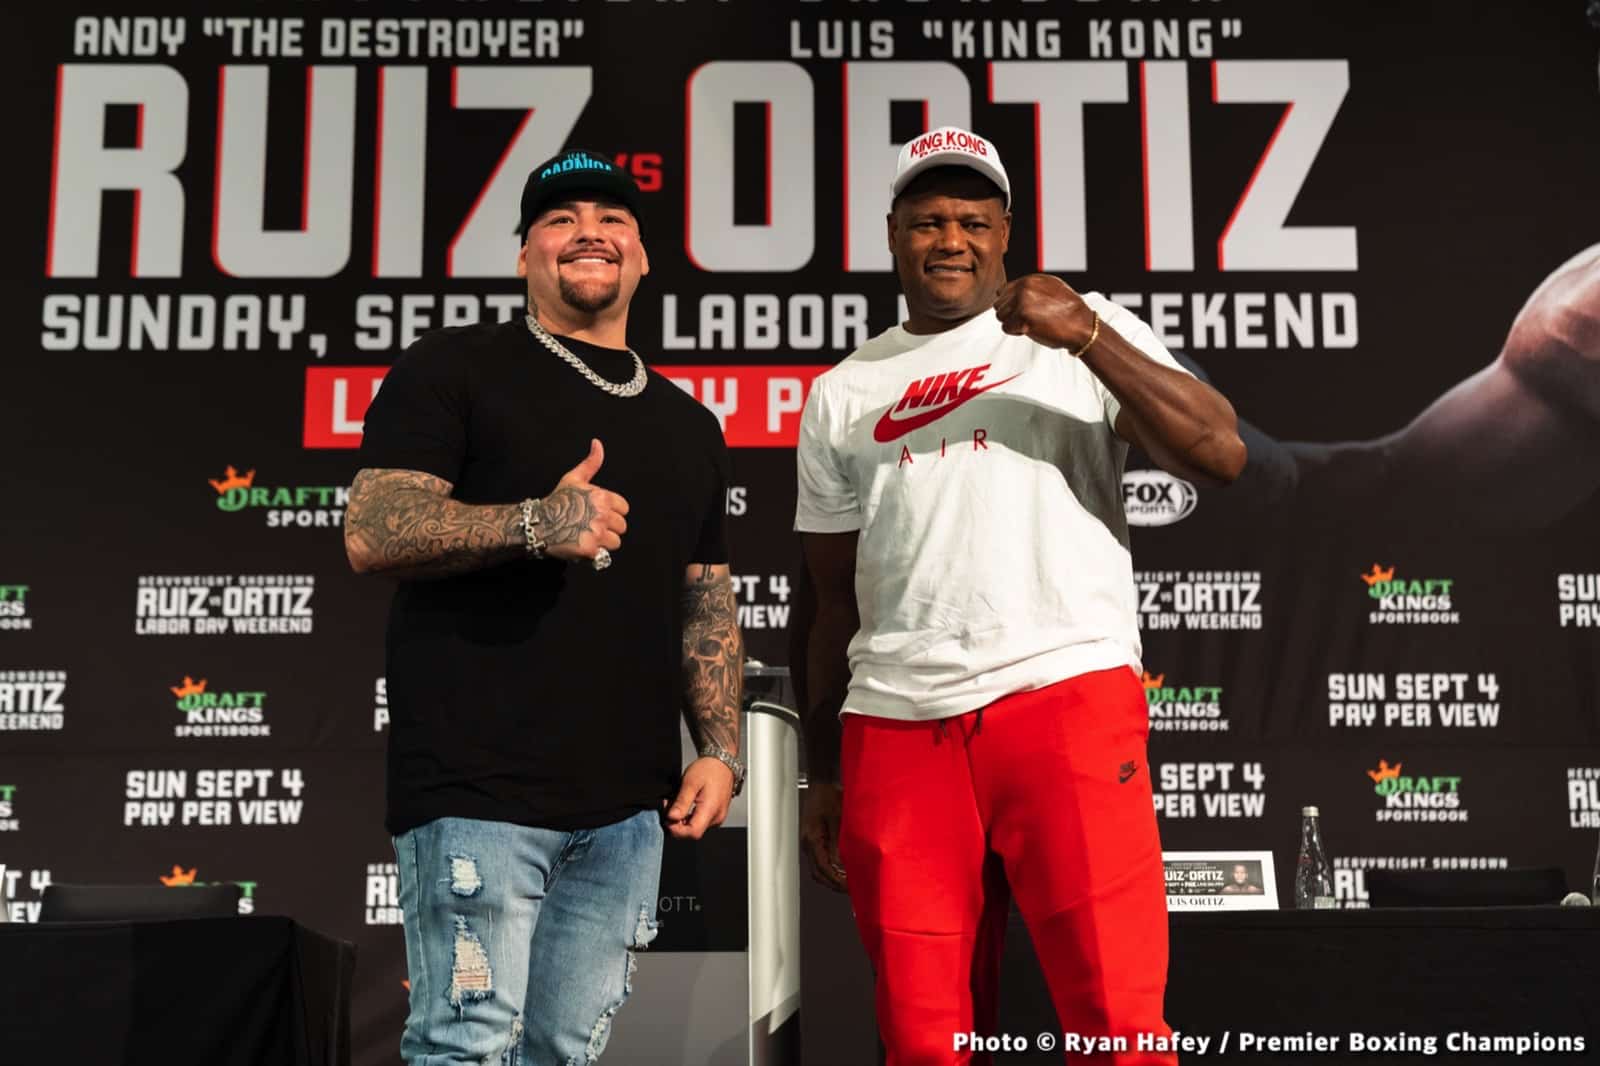 Luis Ortiz boxing image / photo